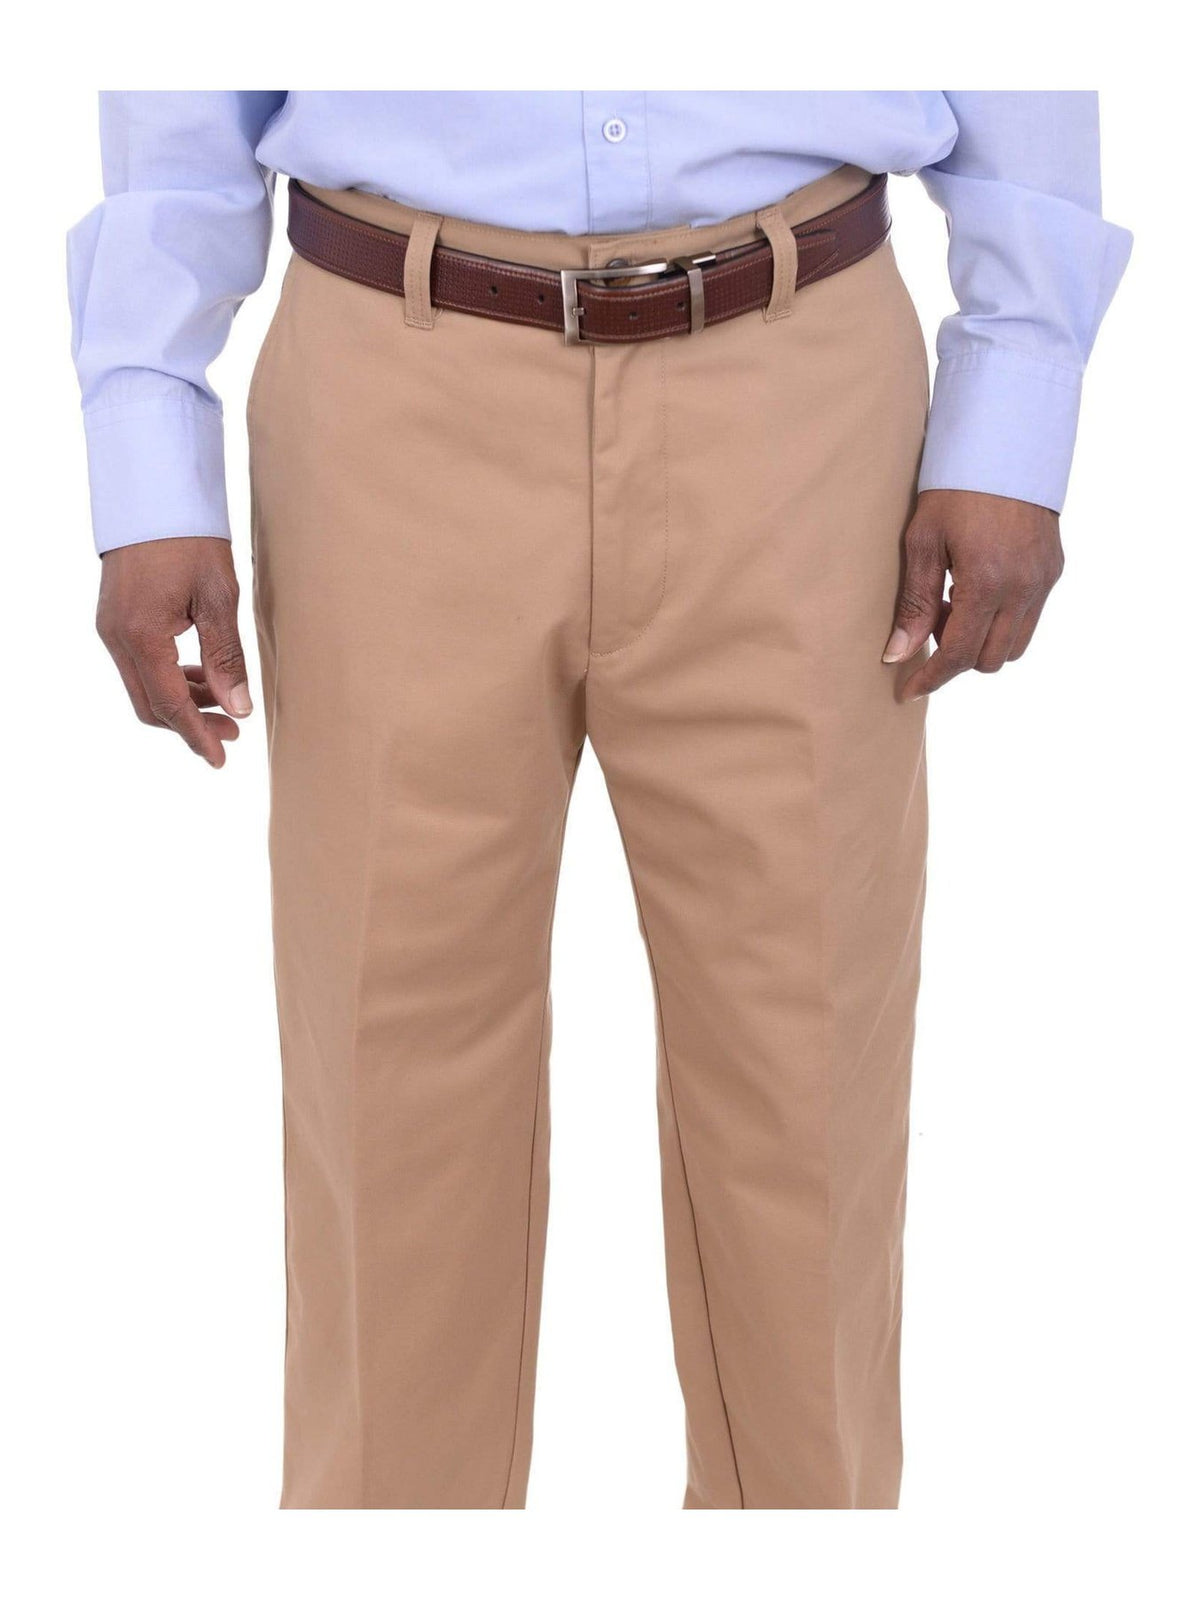 Haggar Men's Premium Comfort Khaki Pant-Multi-Fits Regular and Big & Tall  Sizes, Charcoal, 32W x 32L at Amazon Men's Clothing store